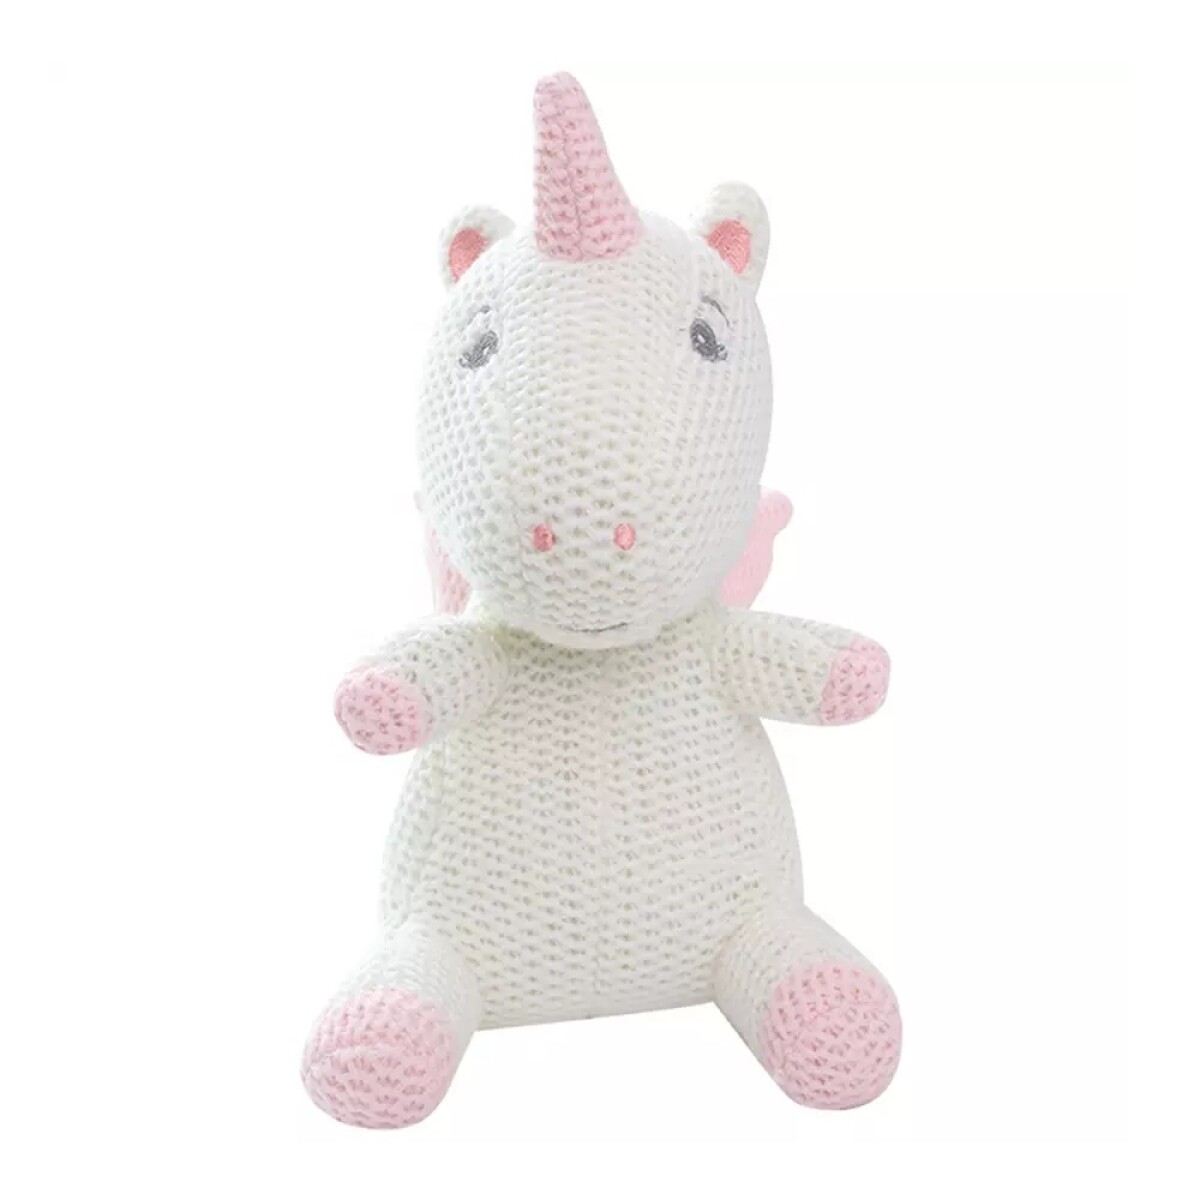 Peluches de Animales Tejidos Crochet c/ Cascabel Bebés Niños - Unicornio 